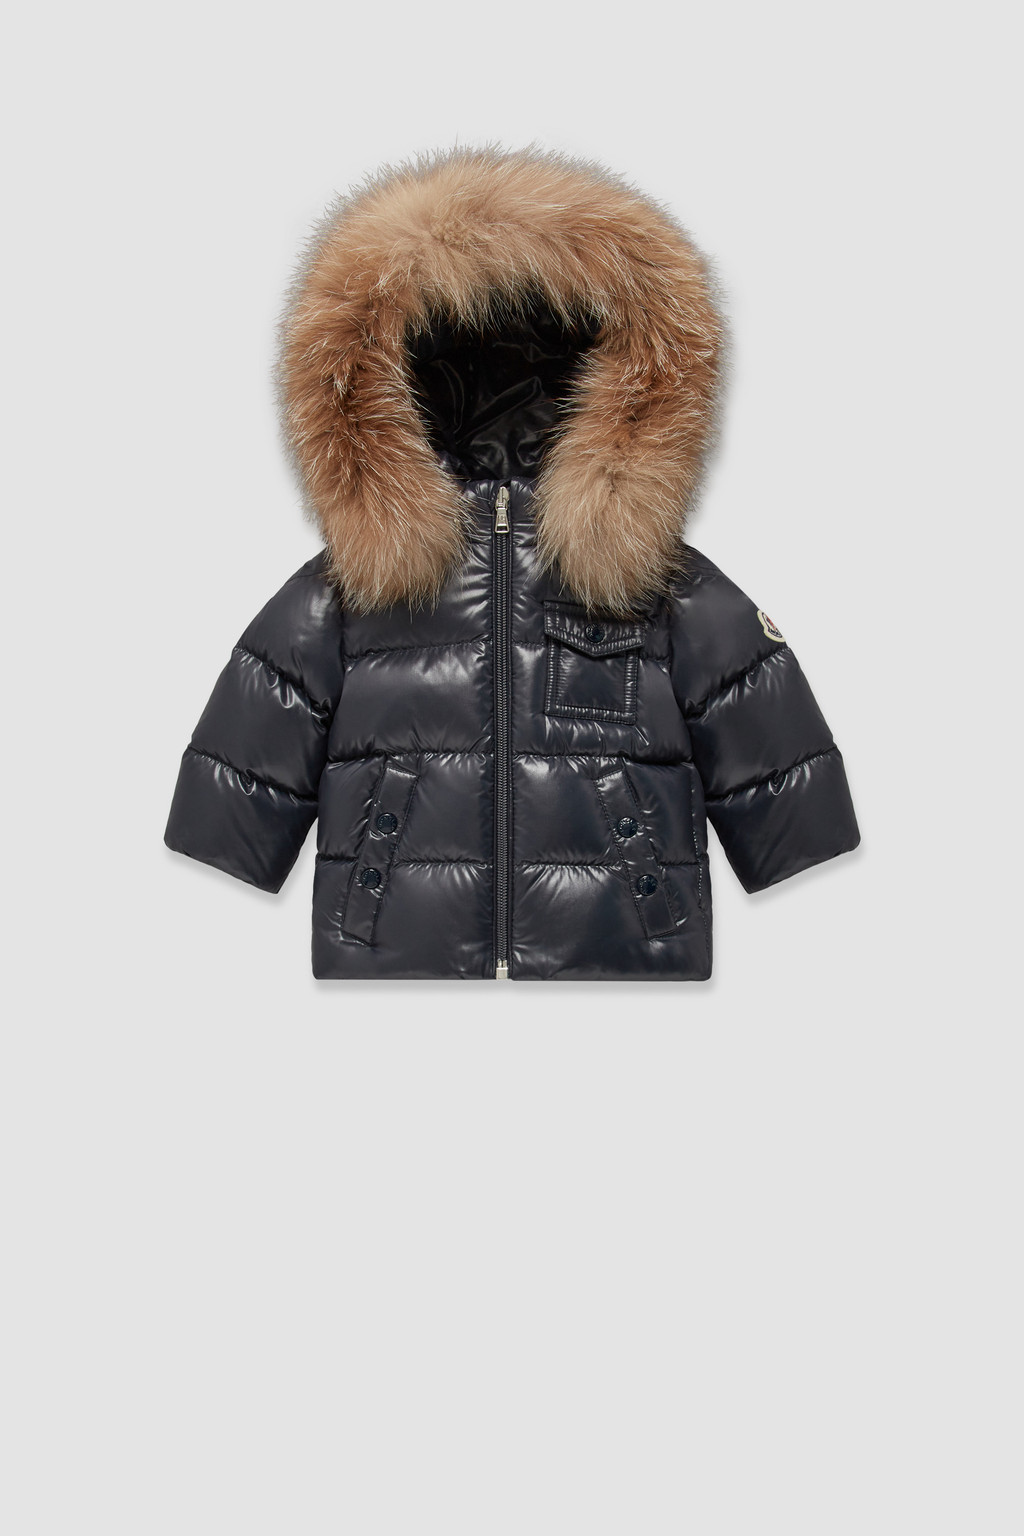 Mens Hooded Parka Warm Fleece Jacket Fur Collar Thick Winter Coat Outwear  Padded | eBay